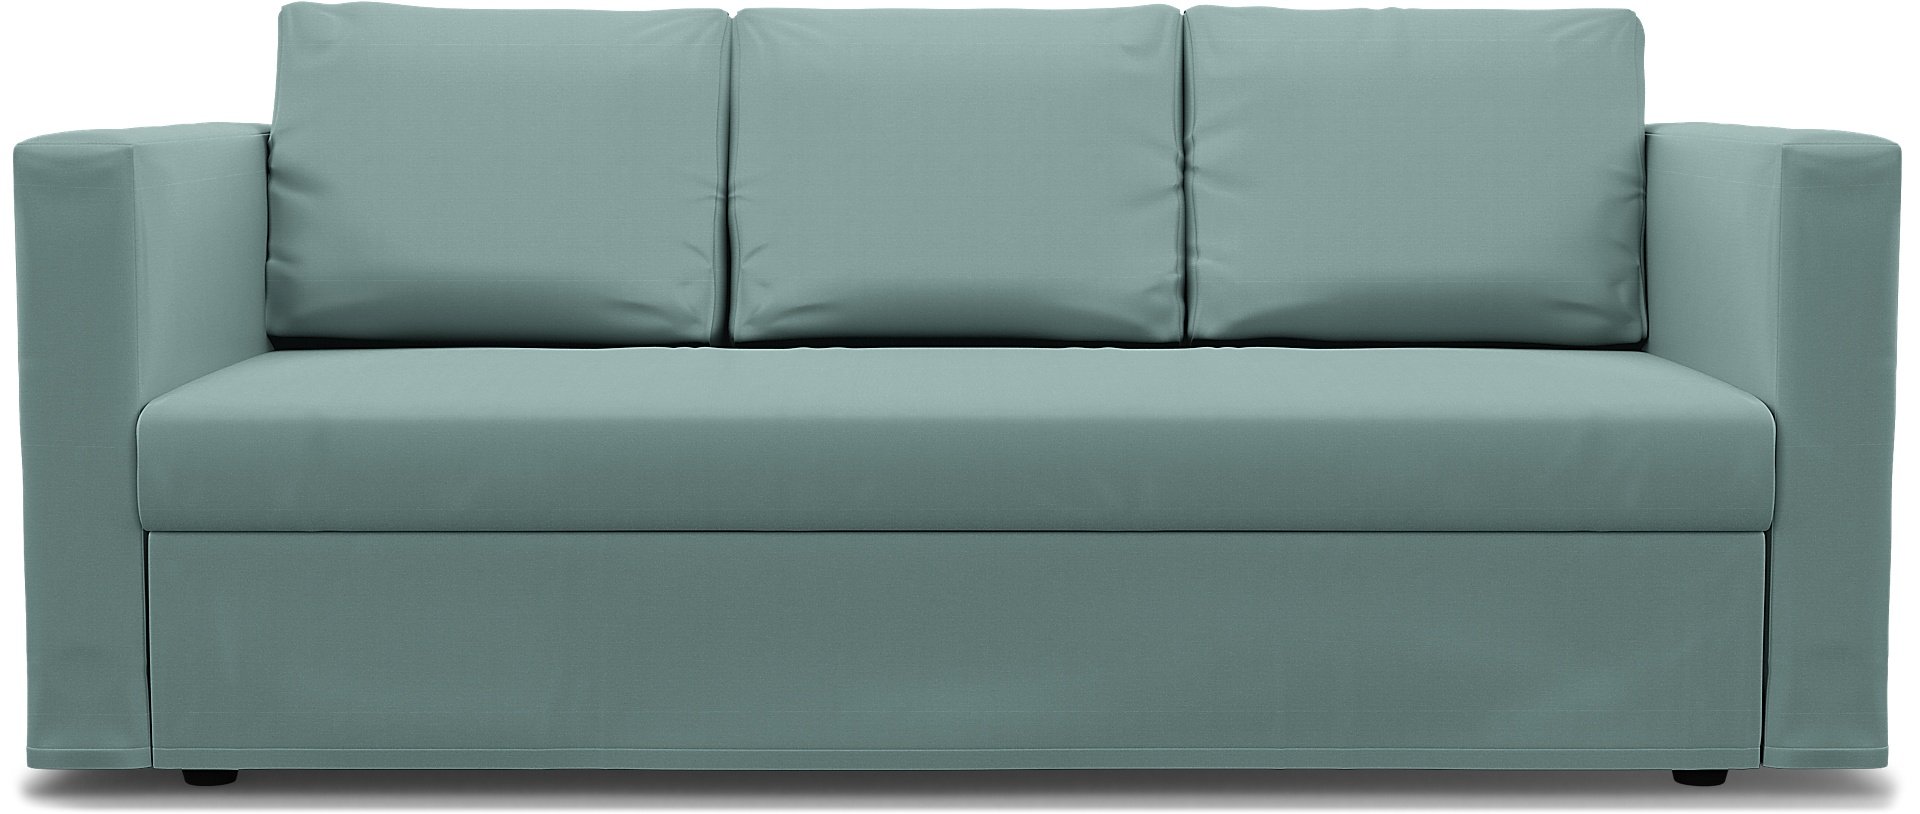 IKEA - Friheten 3 Seater Sofa Bed Cover, Mineral Blue, Cotton - Bemz